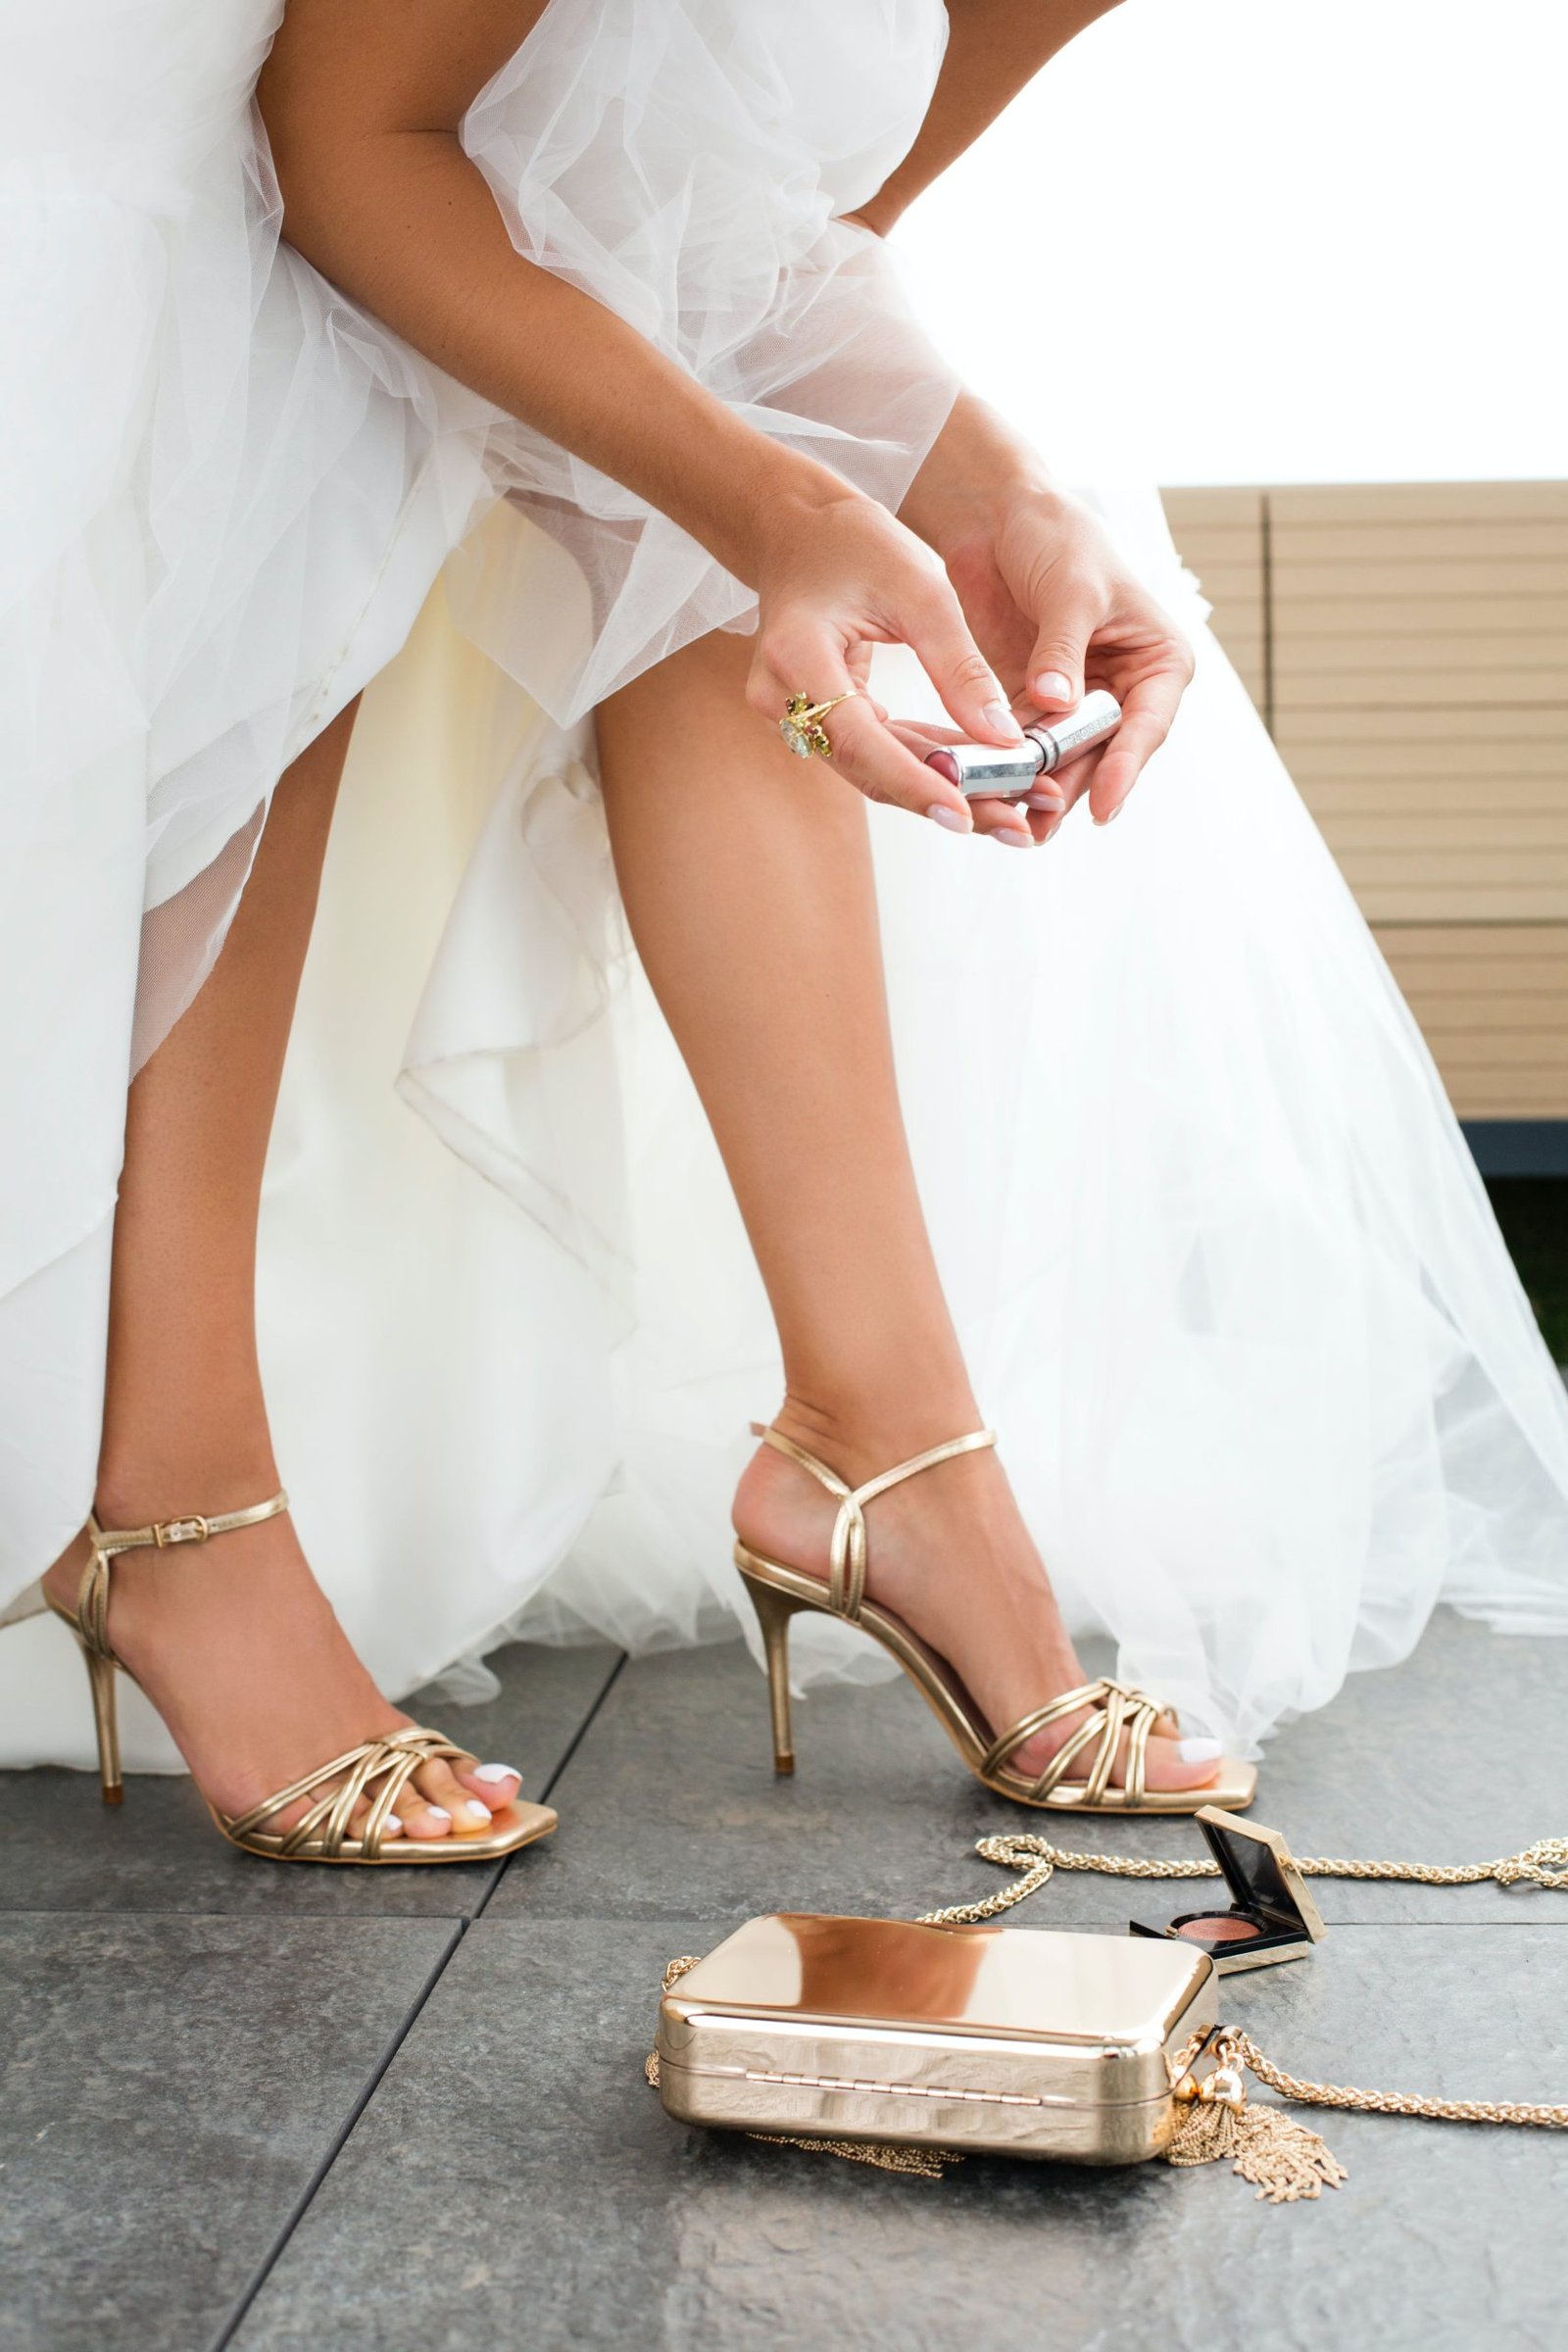 woman in wedding dress wearing diamond ring going through purse